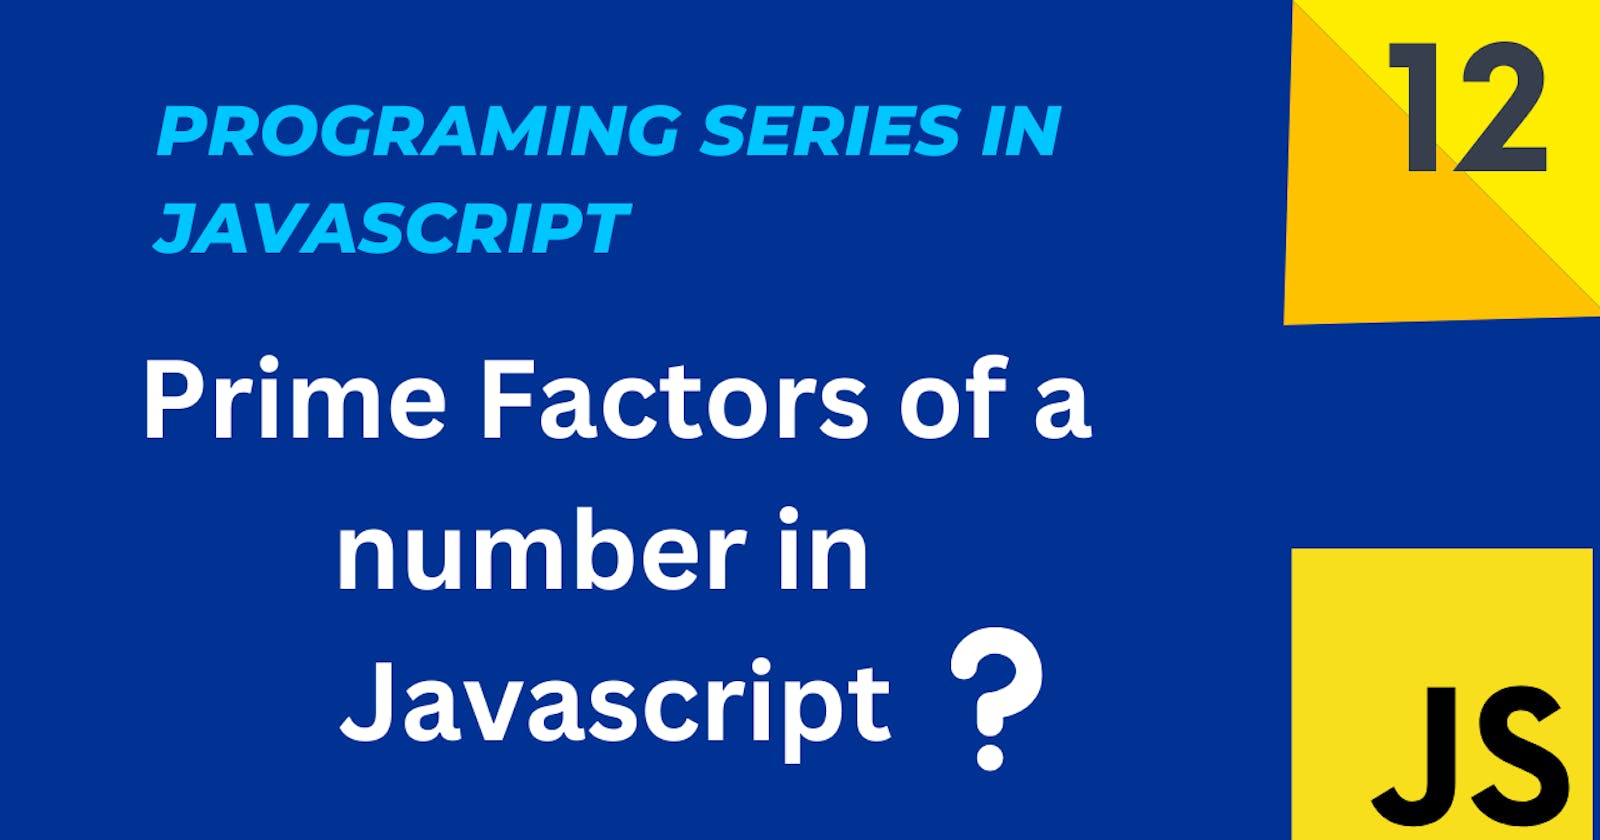 Find Prime Factors of a number in javascript?